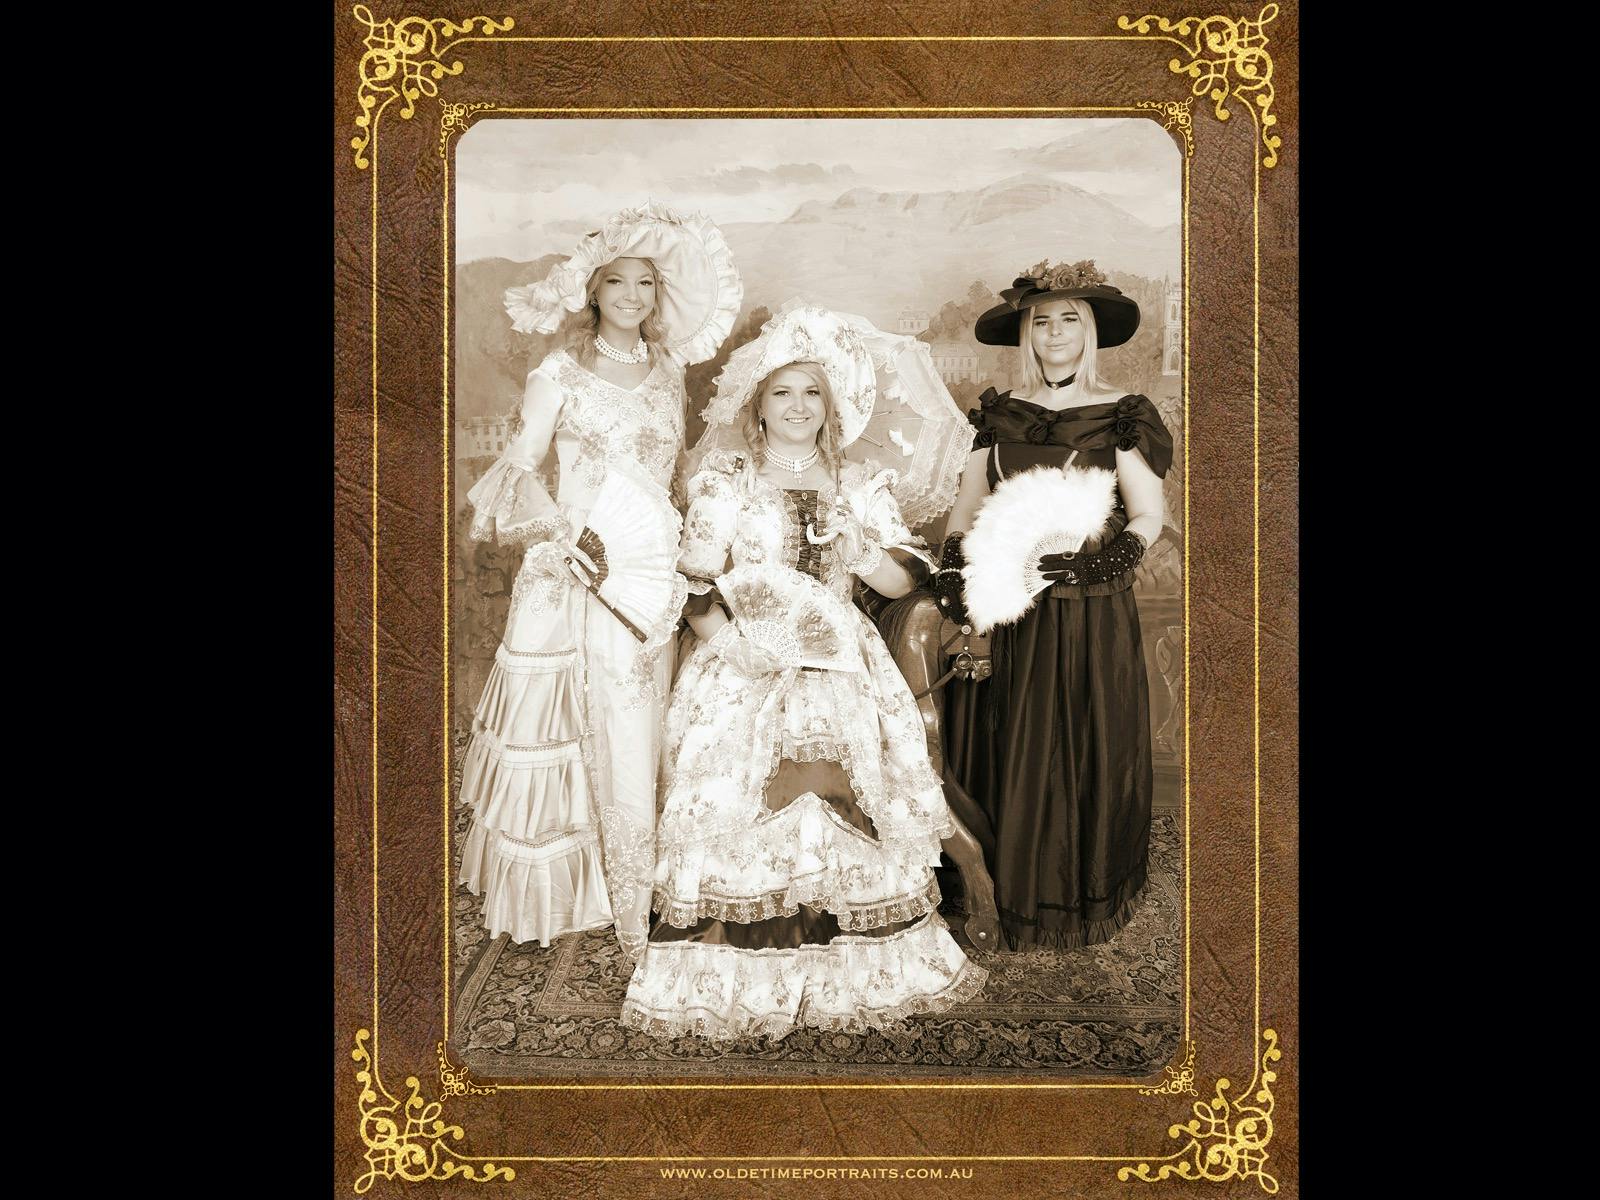 Dress in Classic Victorian Costumes to create a unique portrait